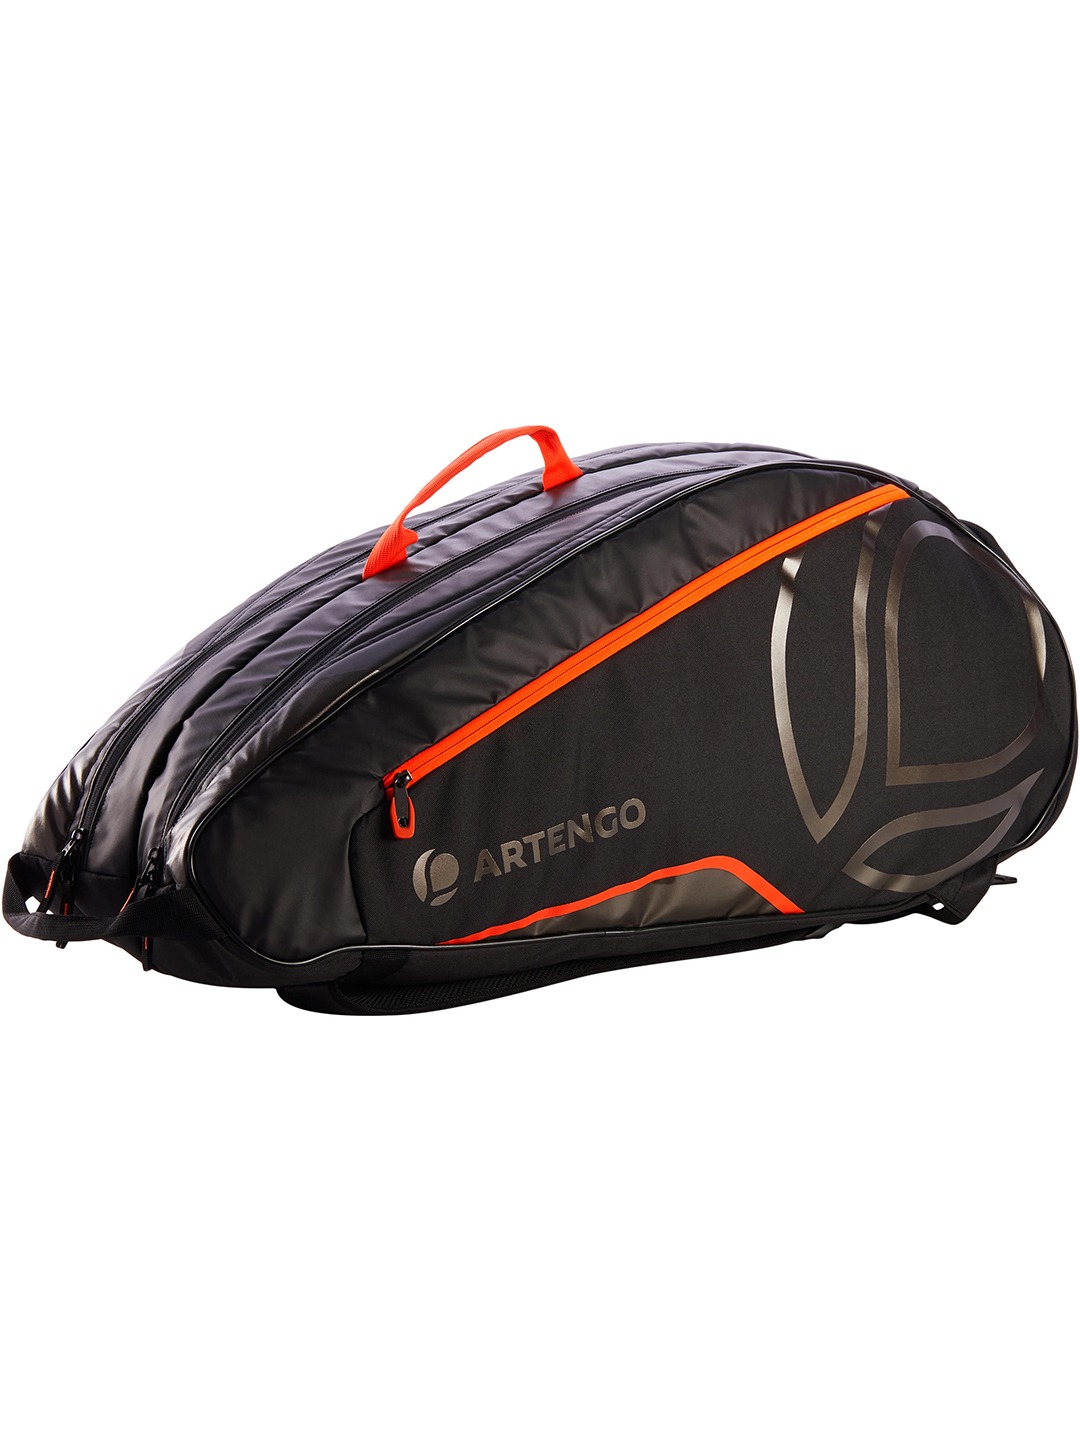 Accessories Backpacks | Artengo By Decathlon Unisex Black & Orange Solid Tennis Bag - YI58654